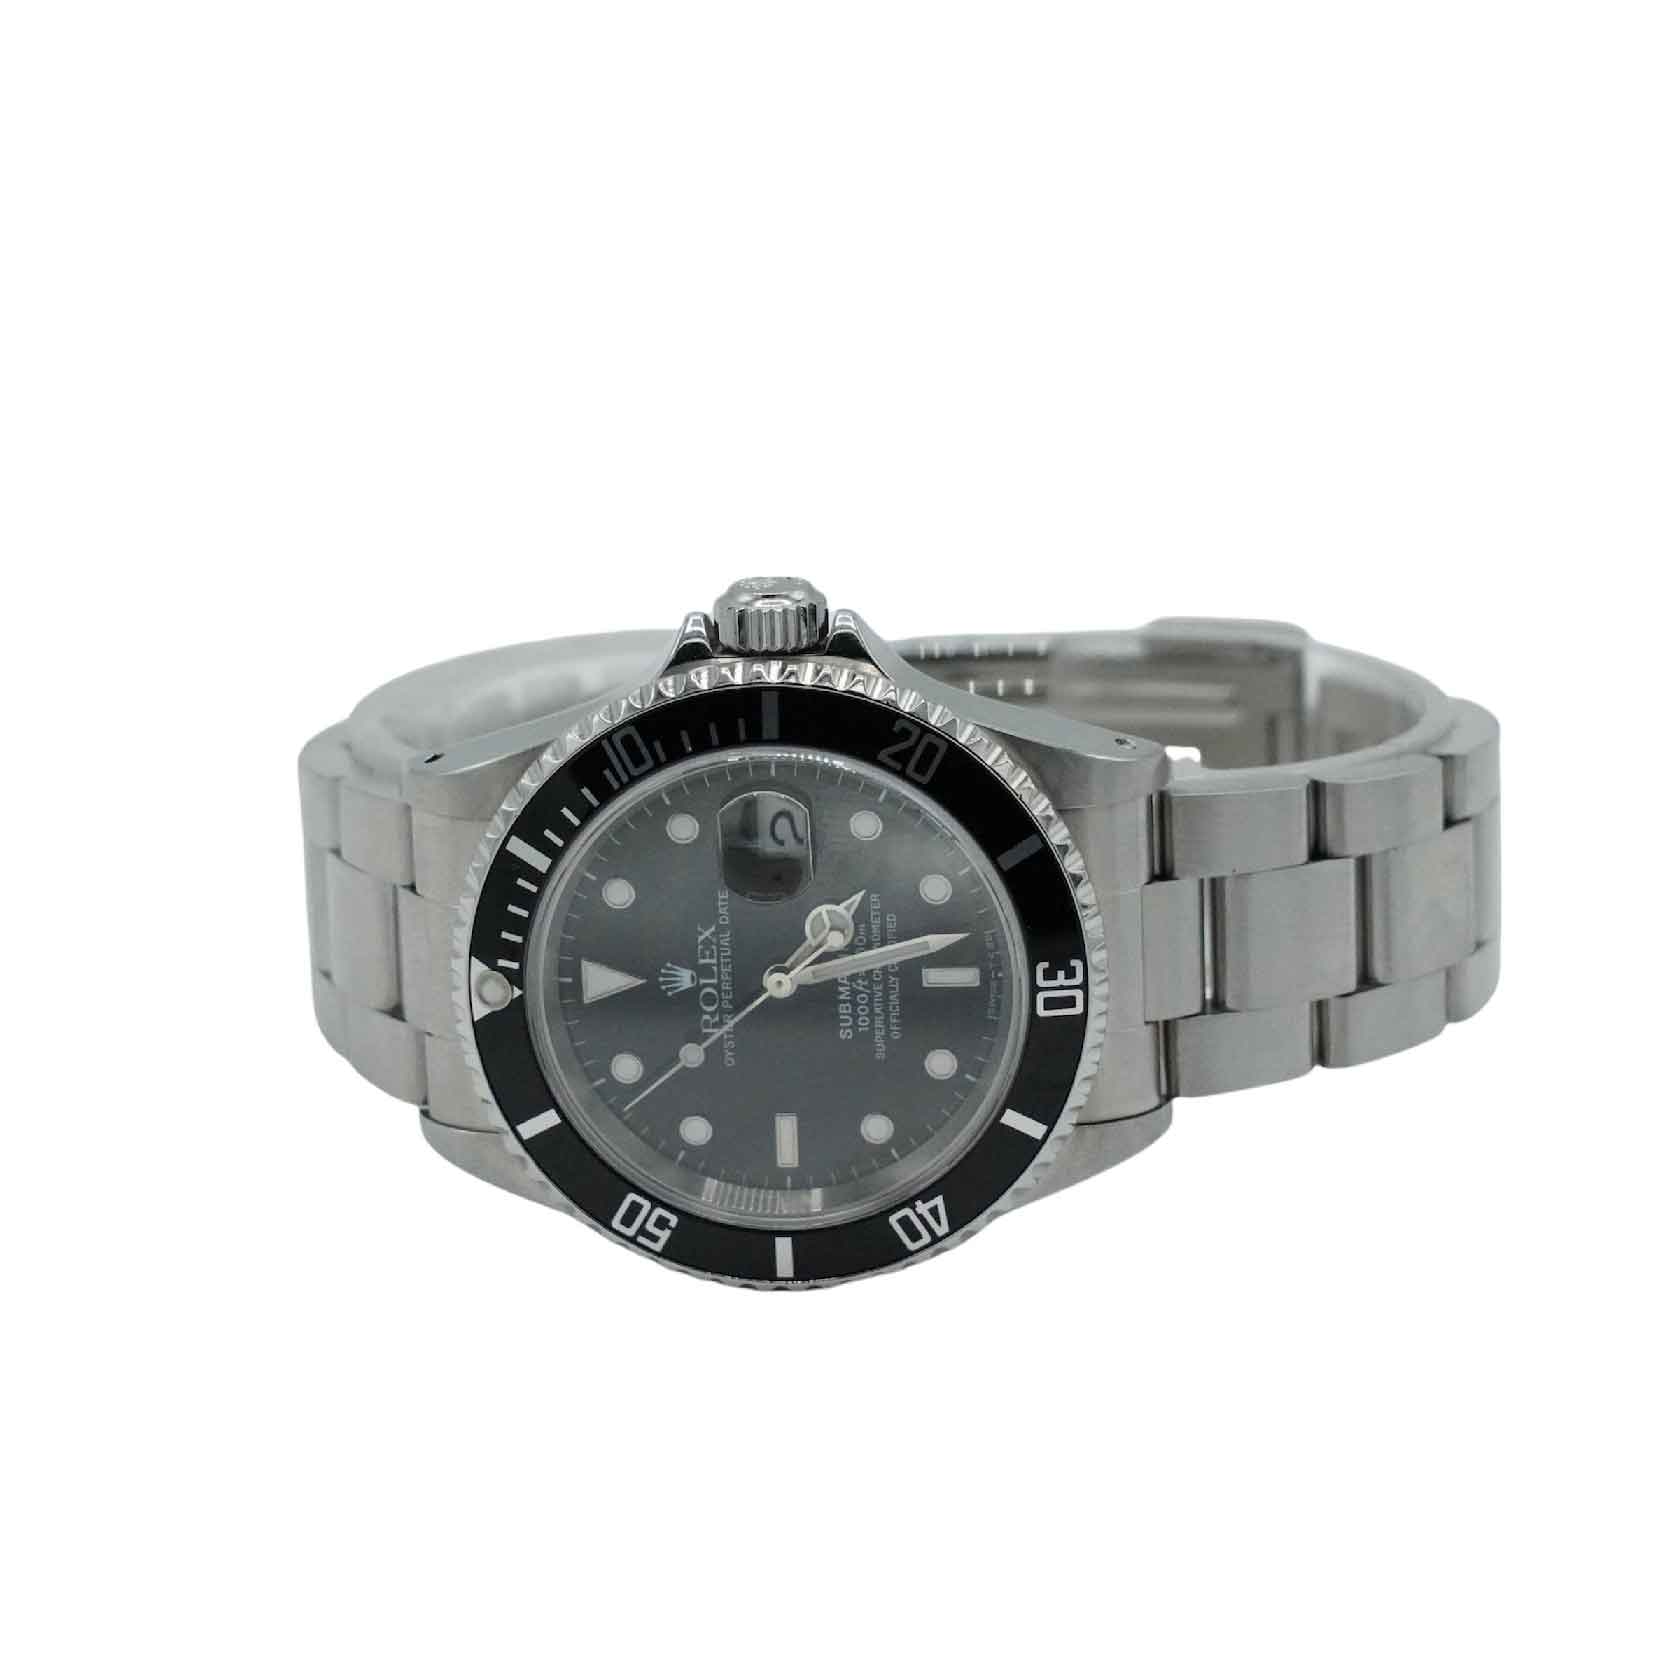 Rolex Submariner Date Stainless Steel Watch Ref 16610 Black Dial